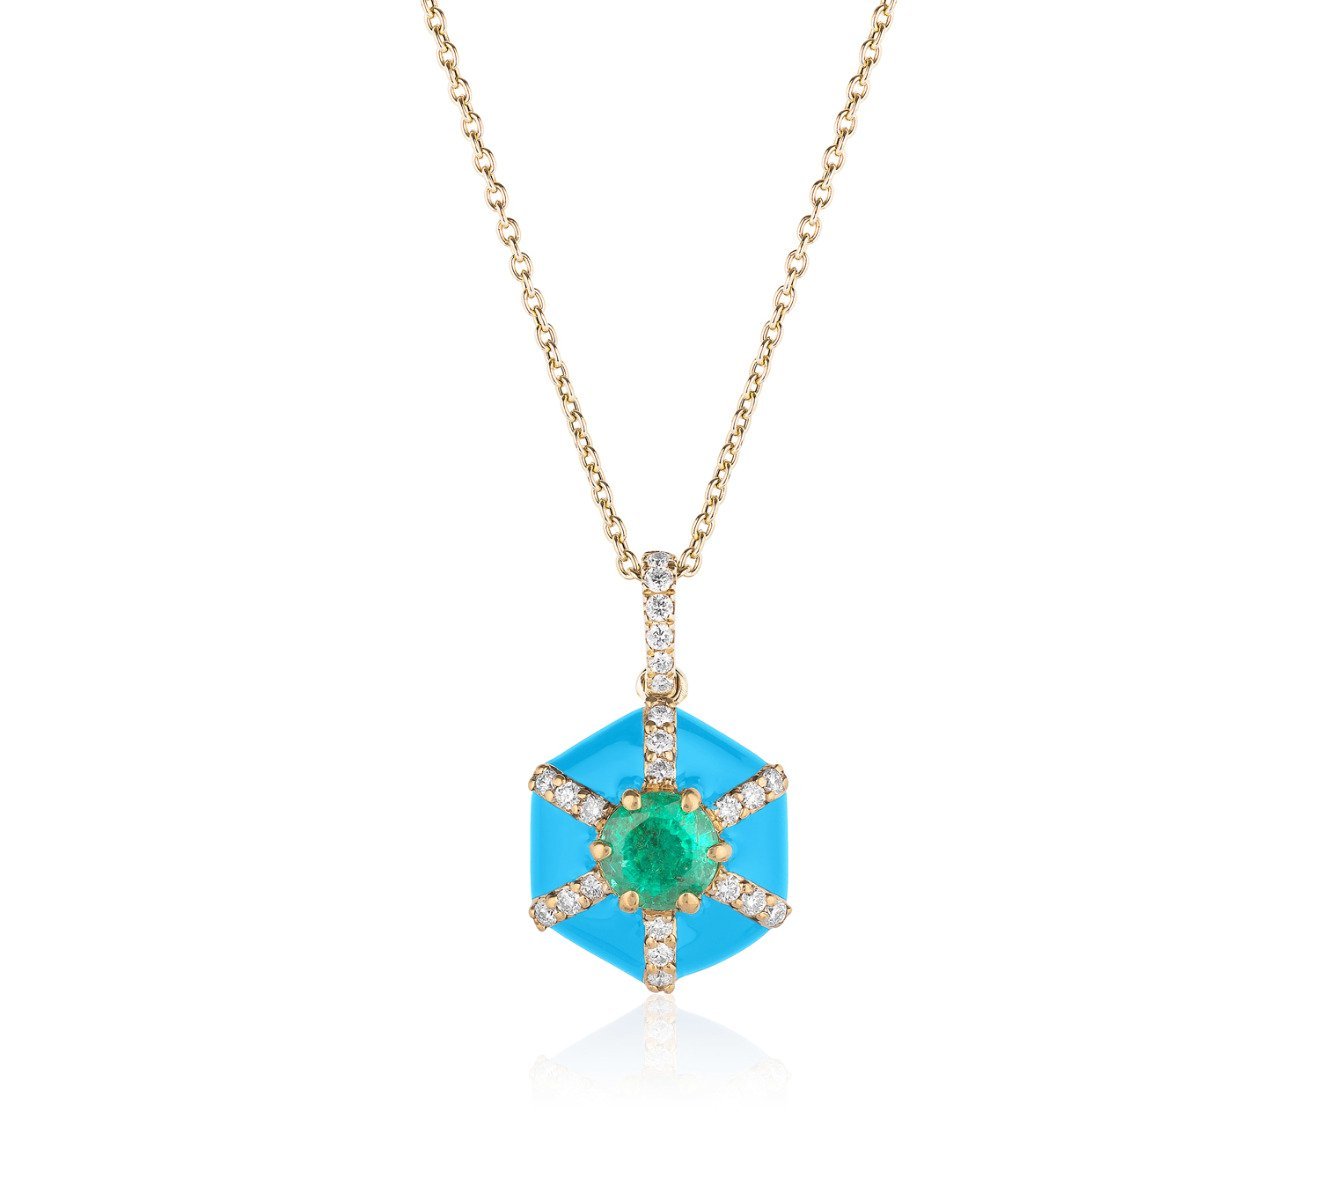 Goshwara "Queen" Hexagon Emerald Pendant Necklace With Diamonds and Turquoise Enamel